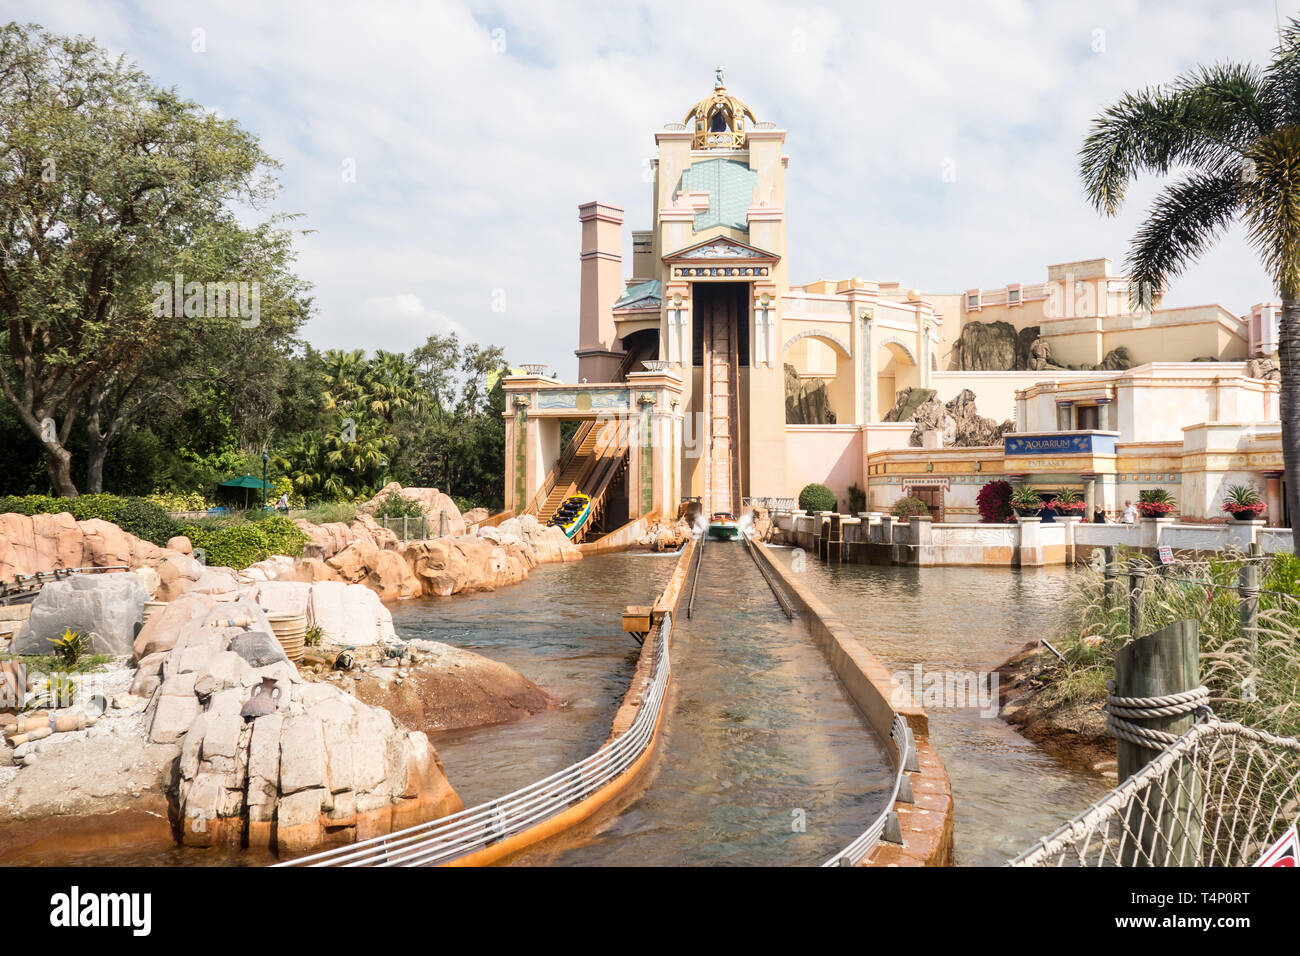 Journey to Atlantis roller coaster ride in Seaworld, Orlando. Stock Photo